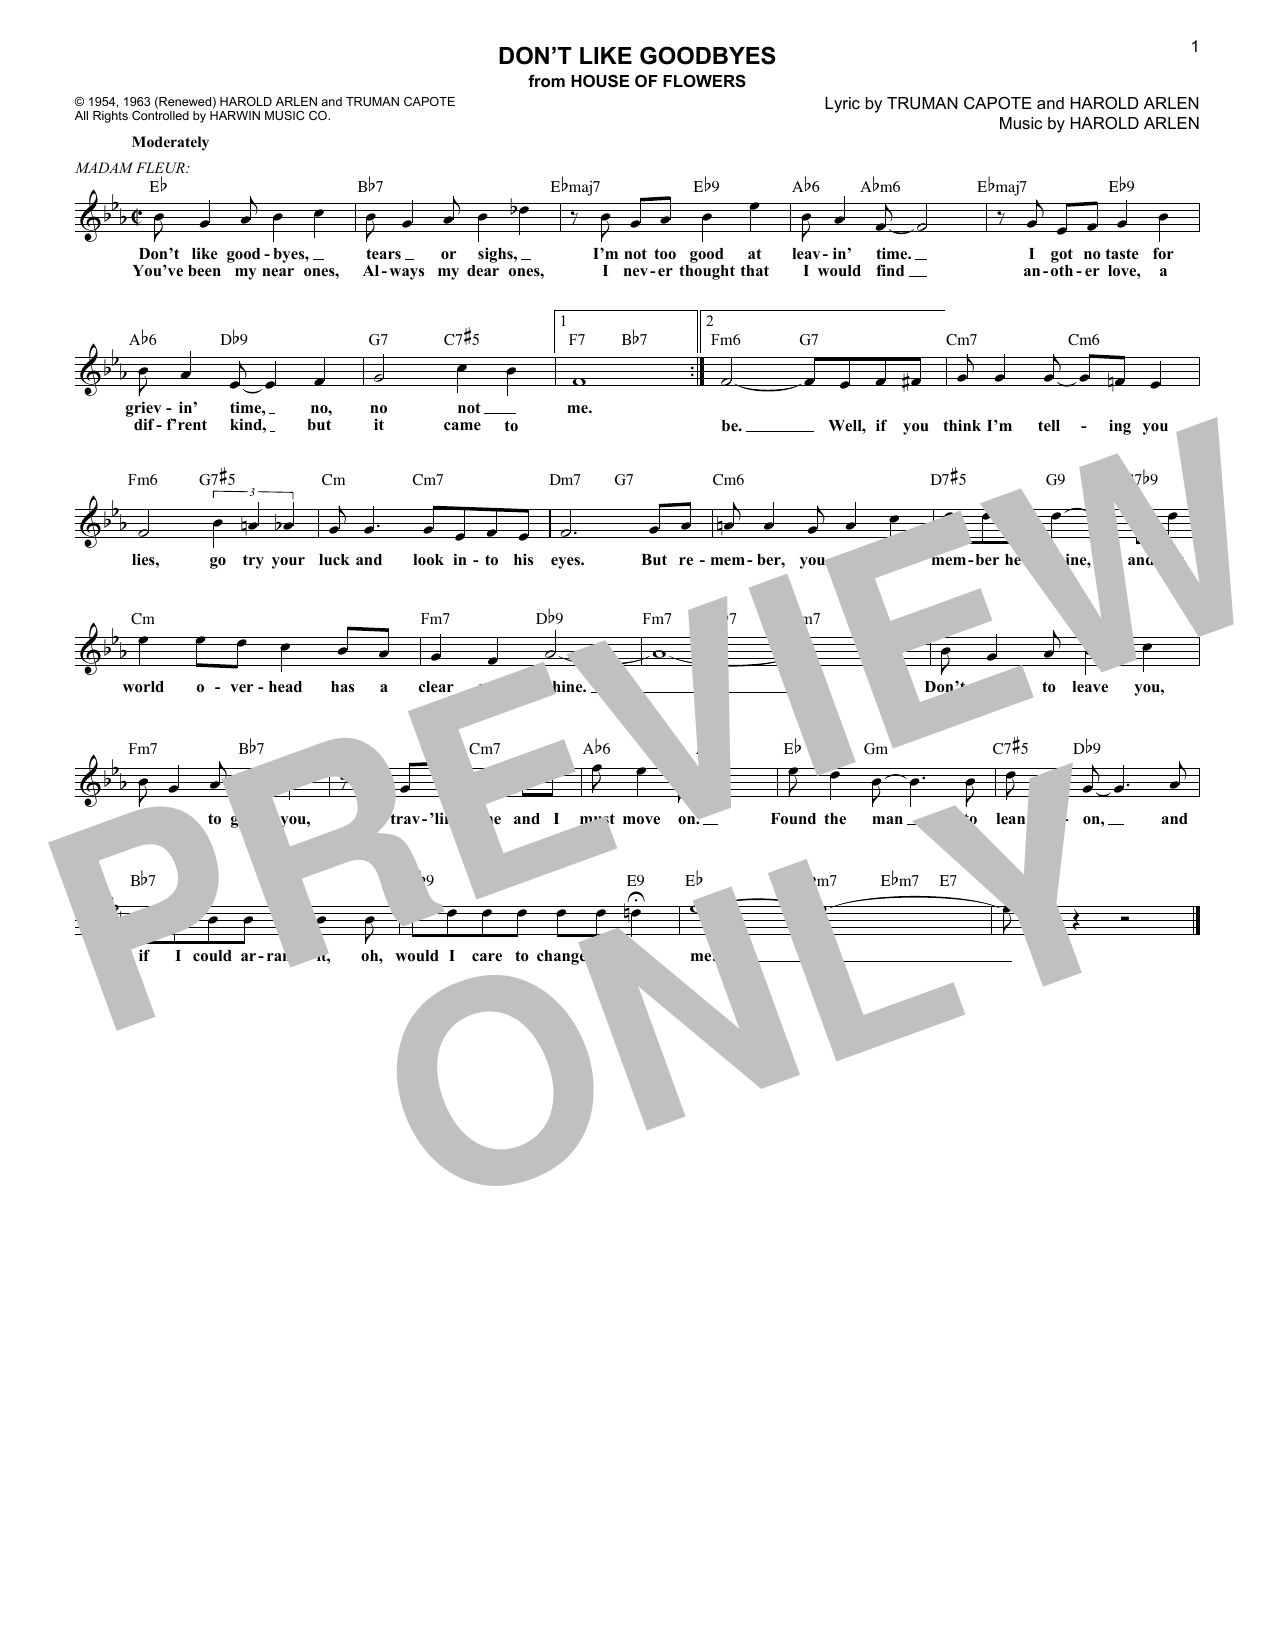 Harold Arlen Don't Like Goodbyes Sheet Music Notes & Chords for Melody Line, Lyrics & Chords - Download or Print PDF